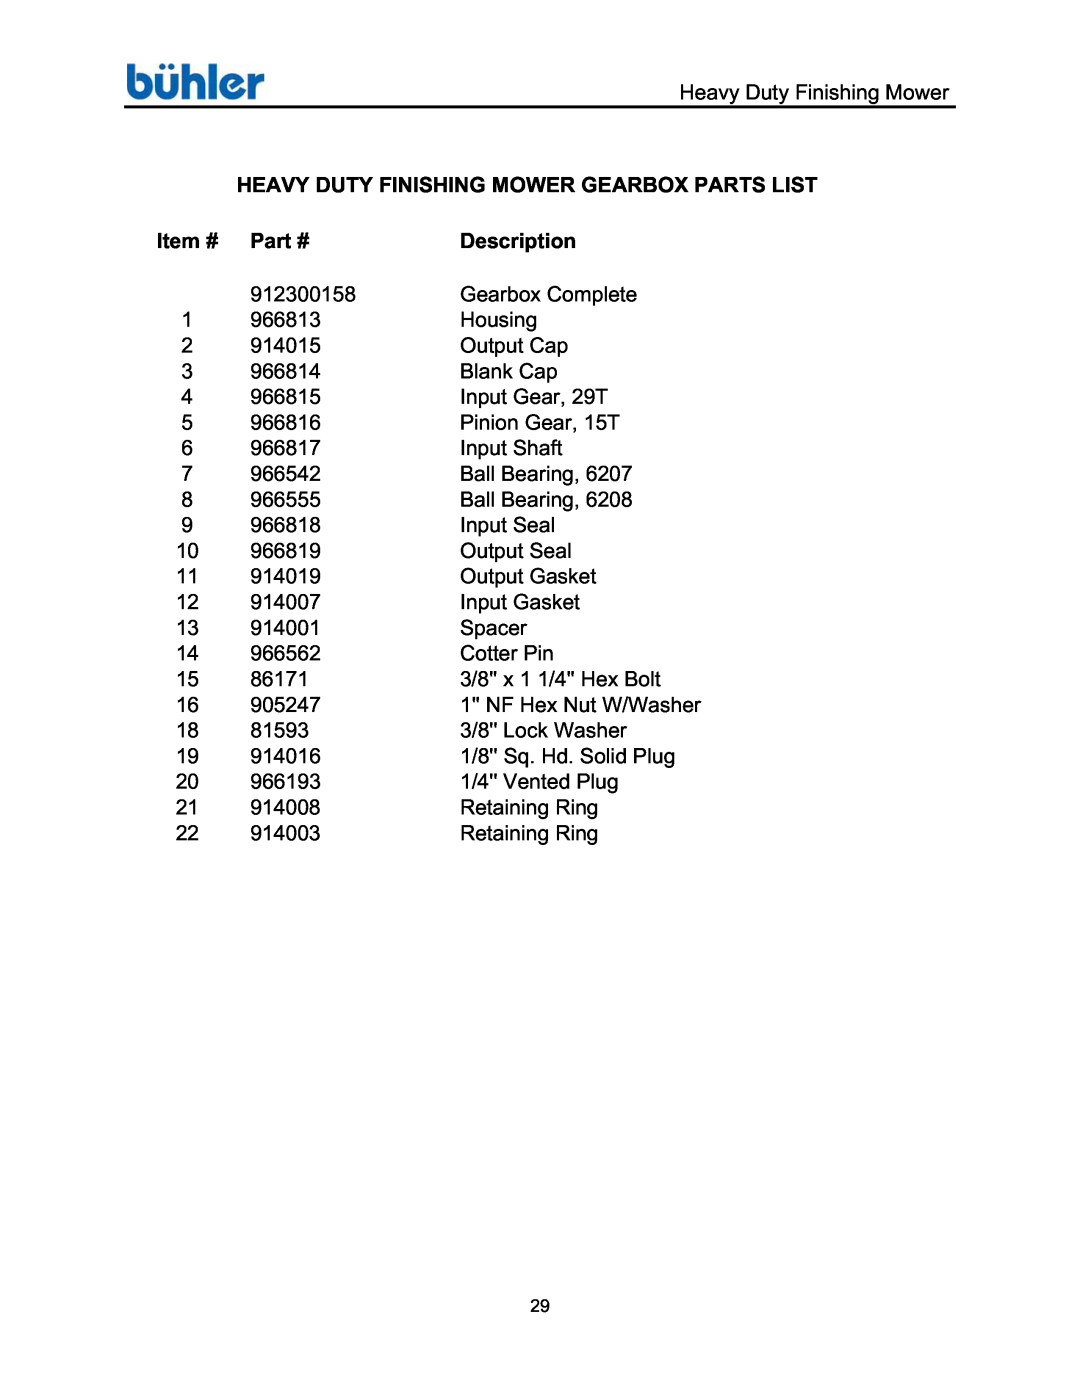 Buhler FK369 manual Heavy Duty Finishing Mower Gearbox Parts List, Item #, Description 